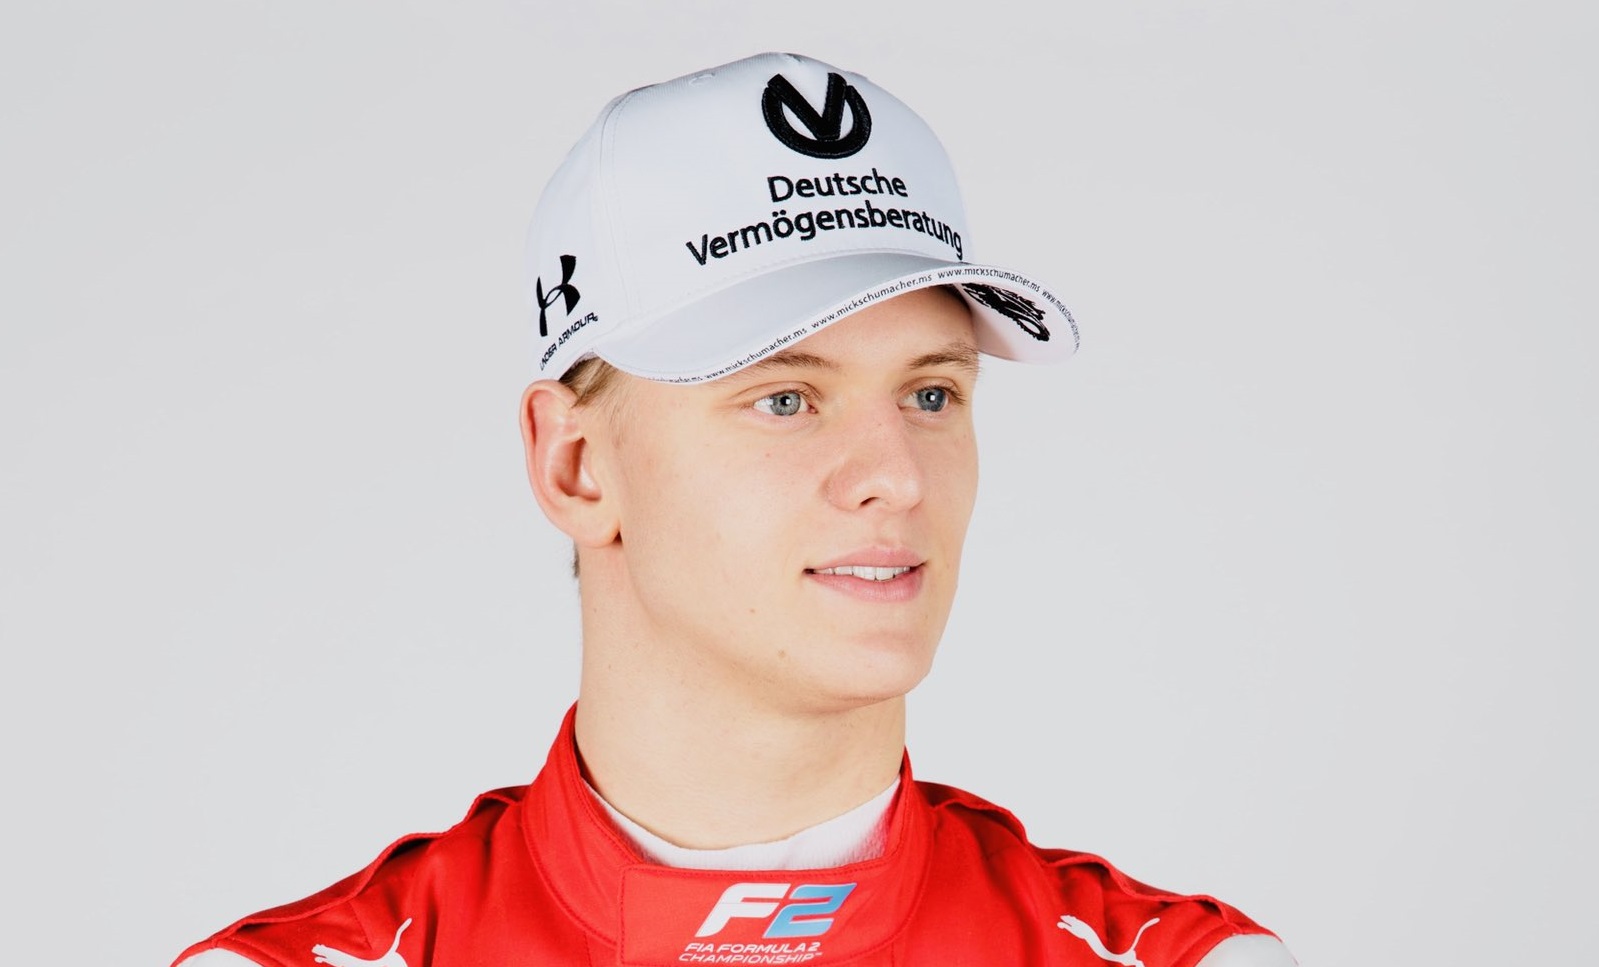 Anak Michael Schumacher, Mick Schumacher, akan tampil di F1 tahun depan. (Foto: Twitter/@SchumacherMick)